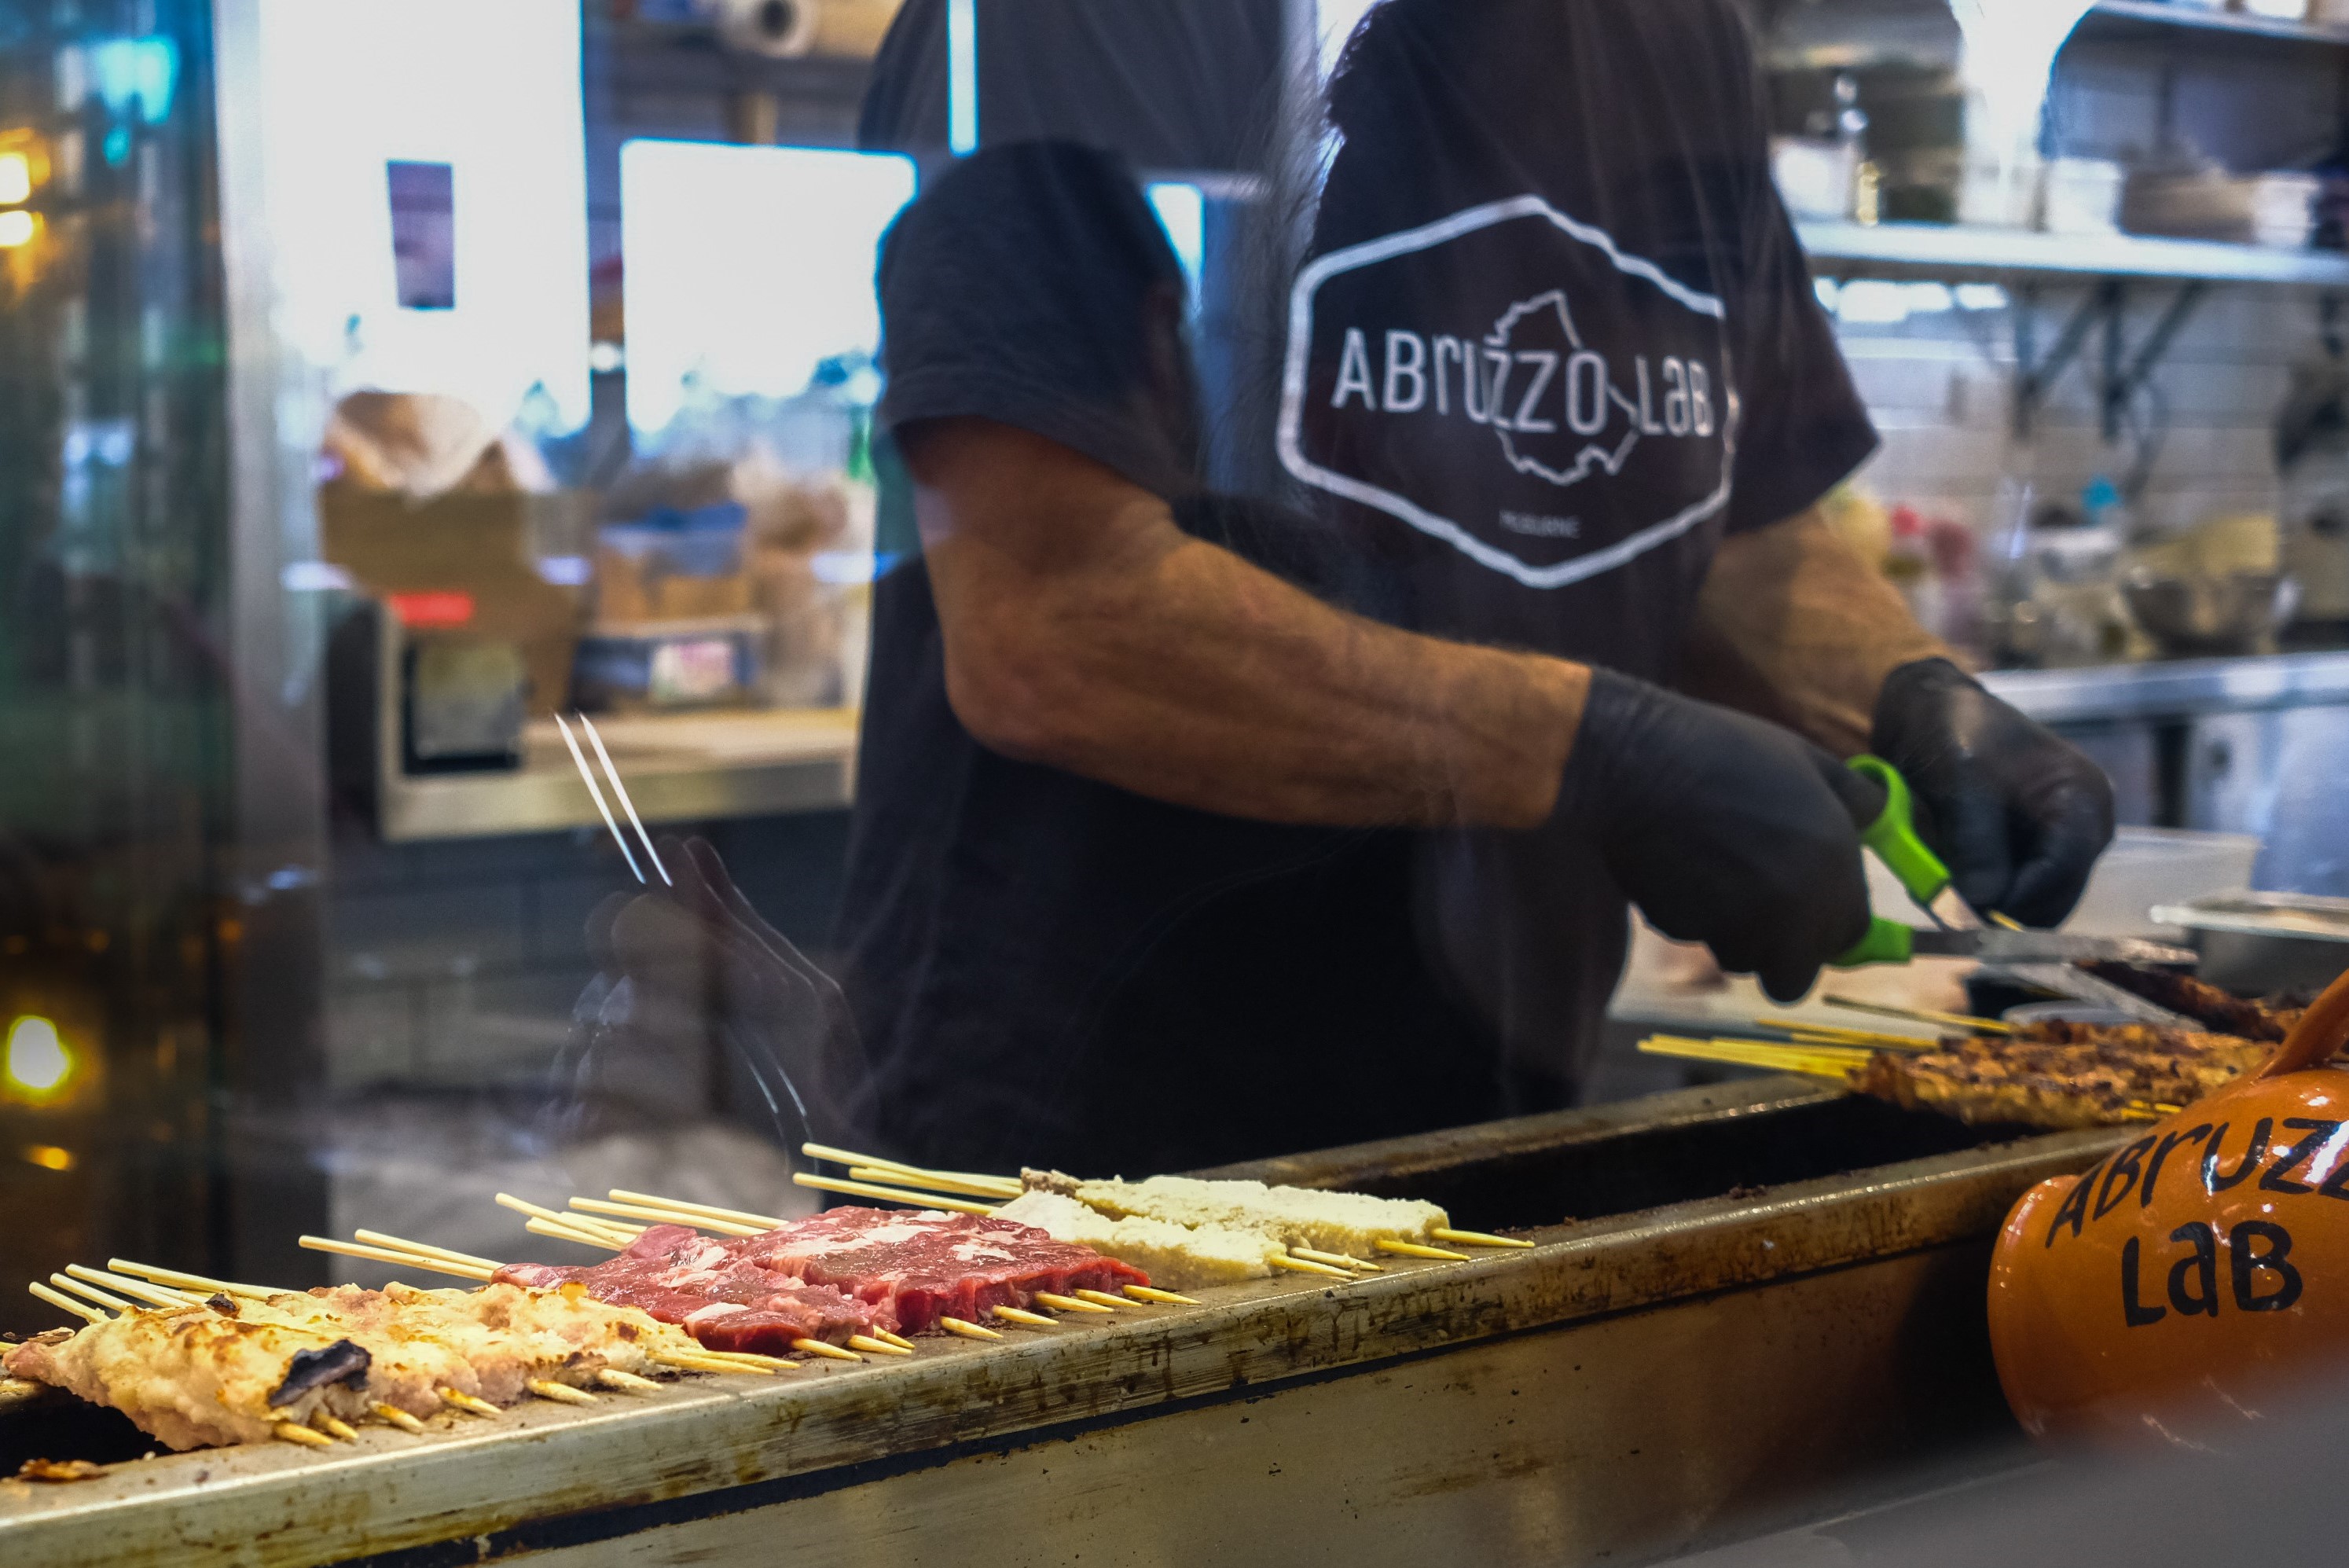 Article image for Scorcher reviews: Abruzzo Lab – ‘Australia’s first dedicated arrosticini restaurant’